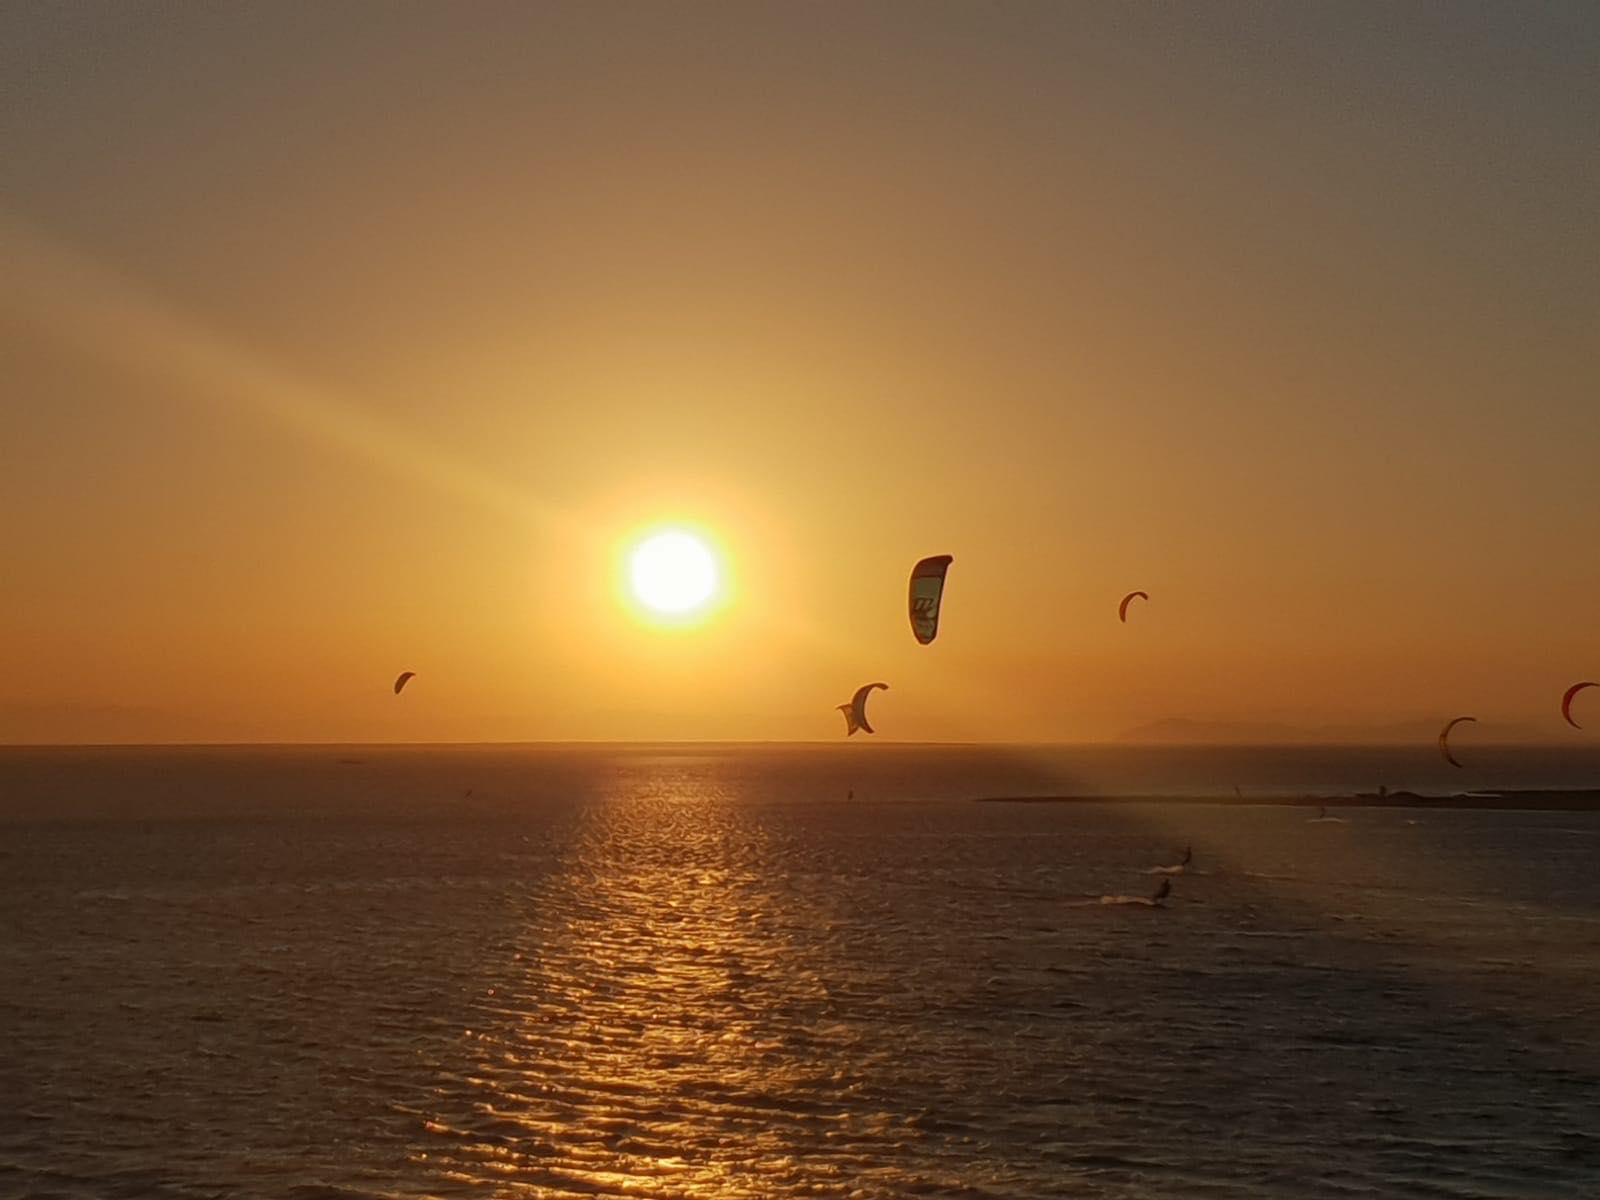 Kitesurfing in the sunset